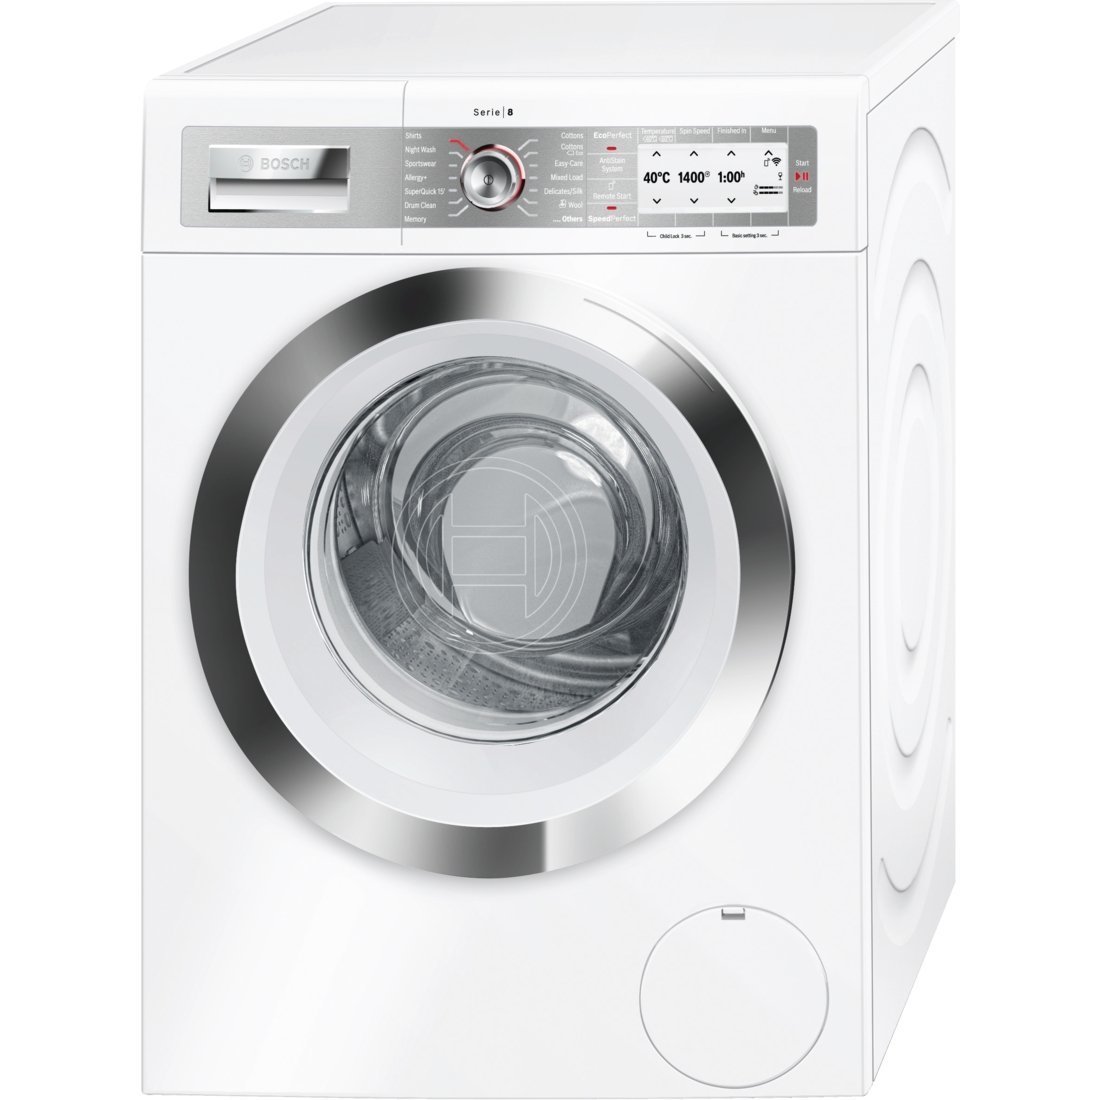 Bosch 9kg 1400 Spin IDOS Home Connect Washing Machine WAYH8790GB White